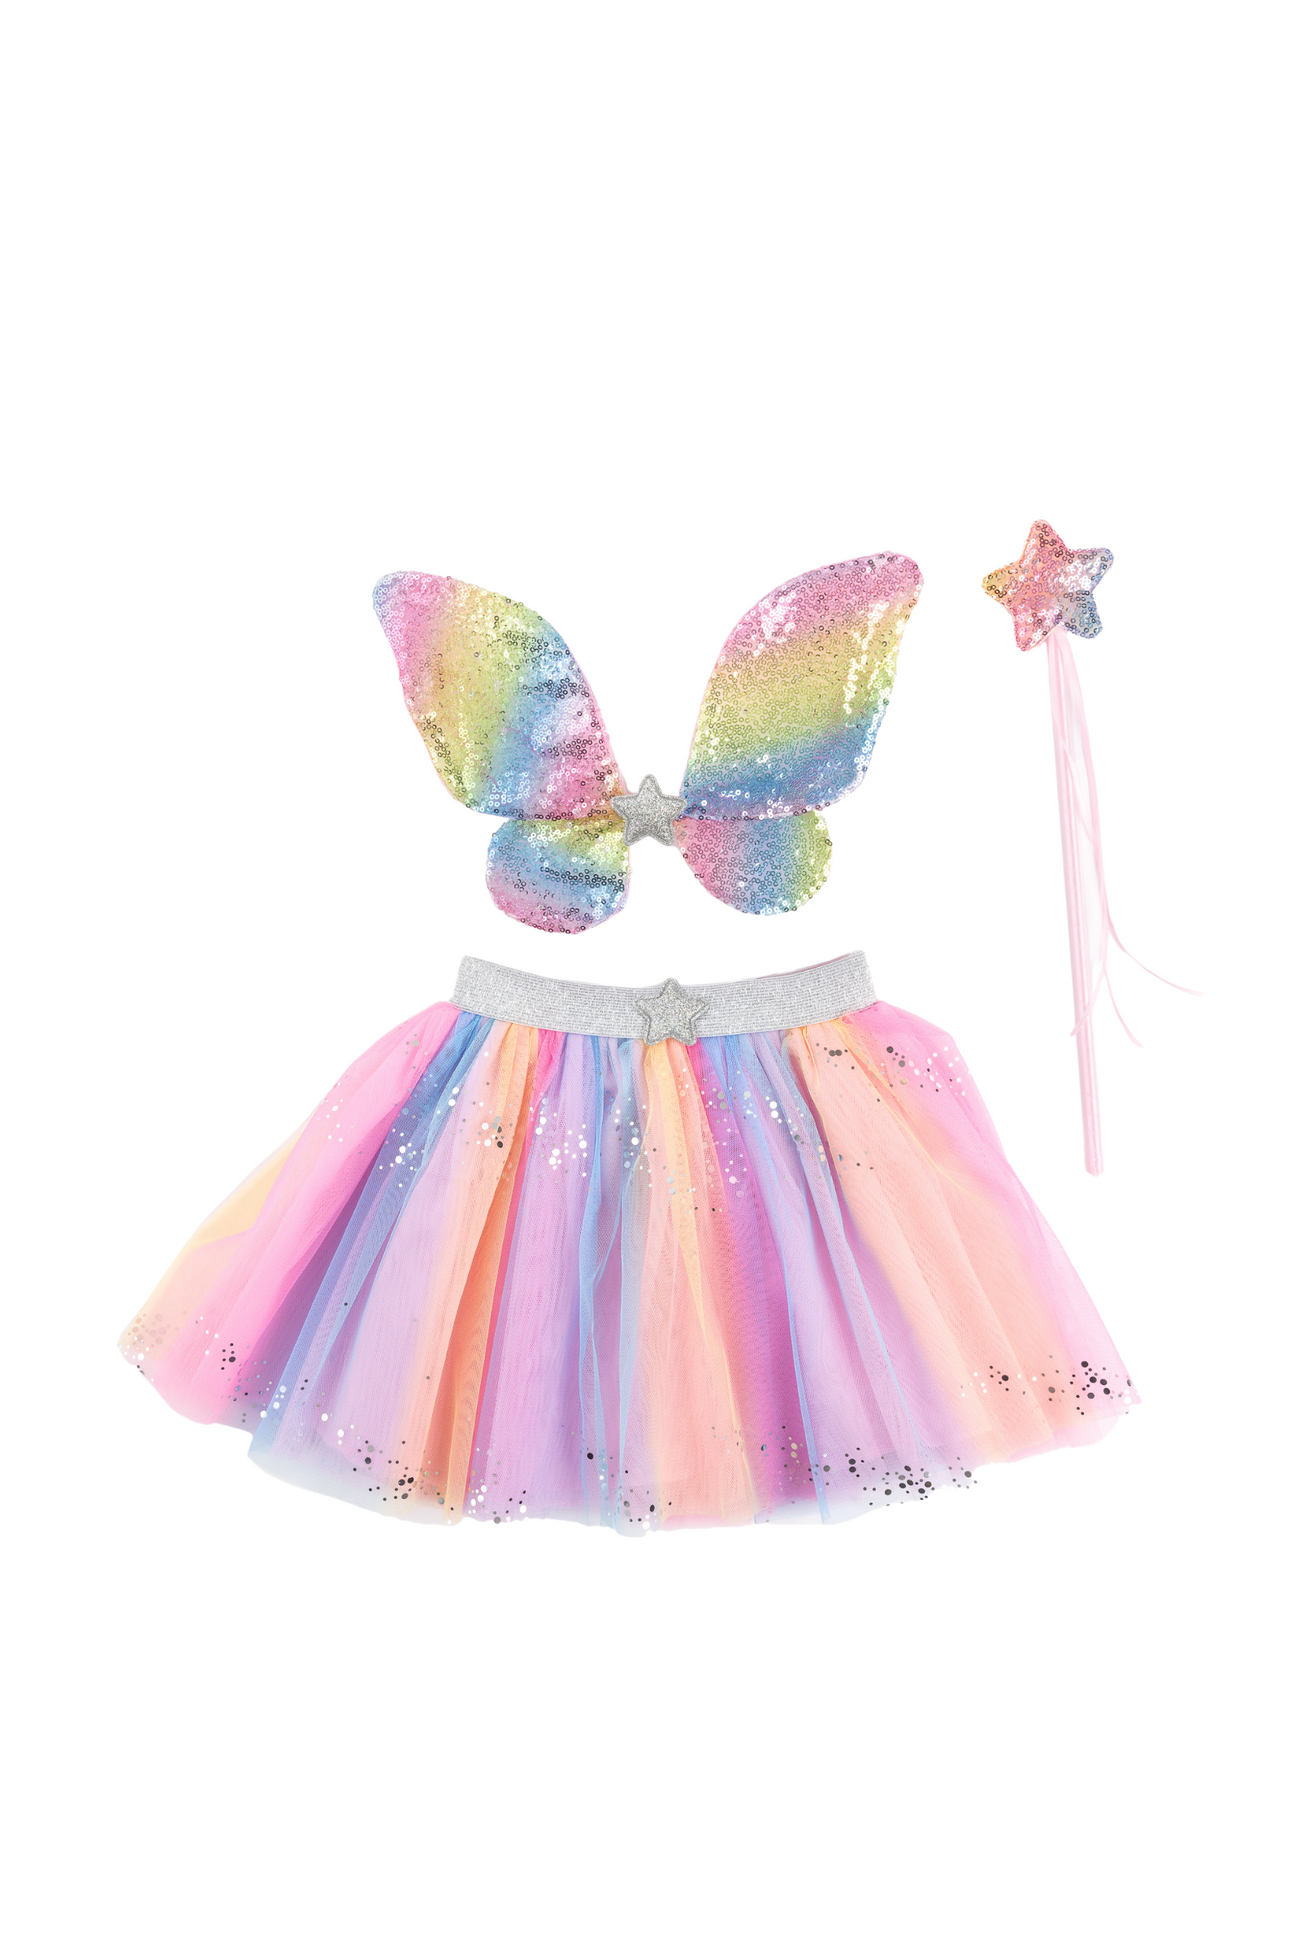 Rainbow Sequins Skirt, Wings & Wand Set